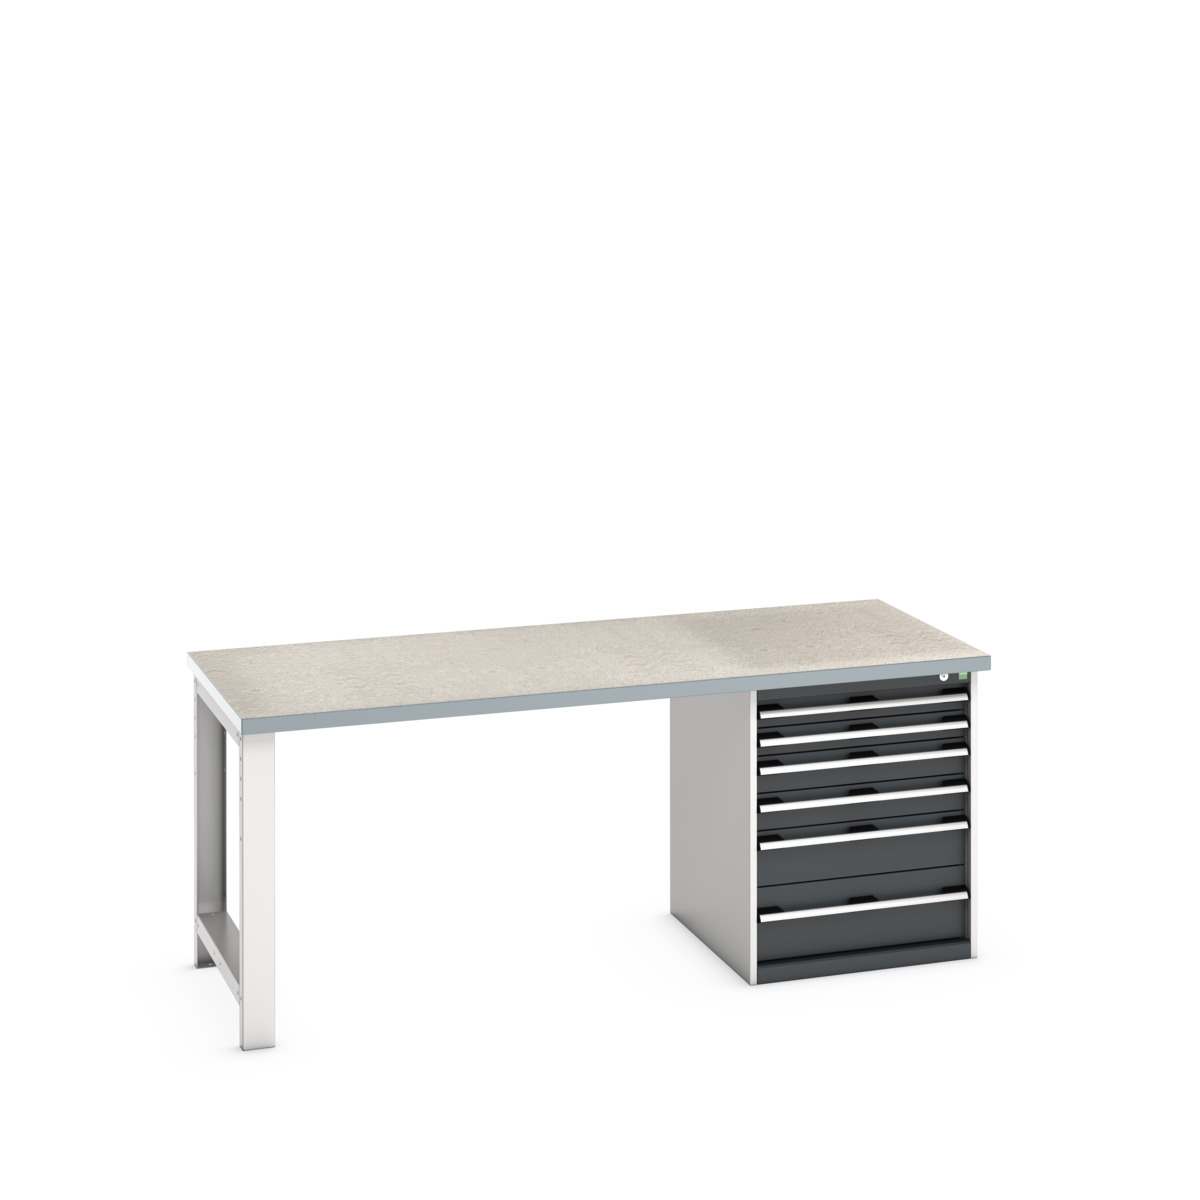 41004116. - cubio pedestal bench (lino)